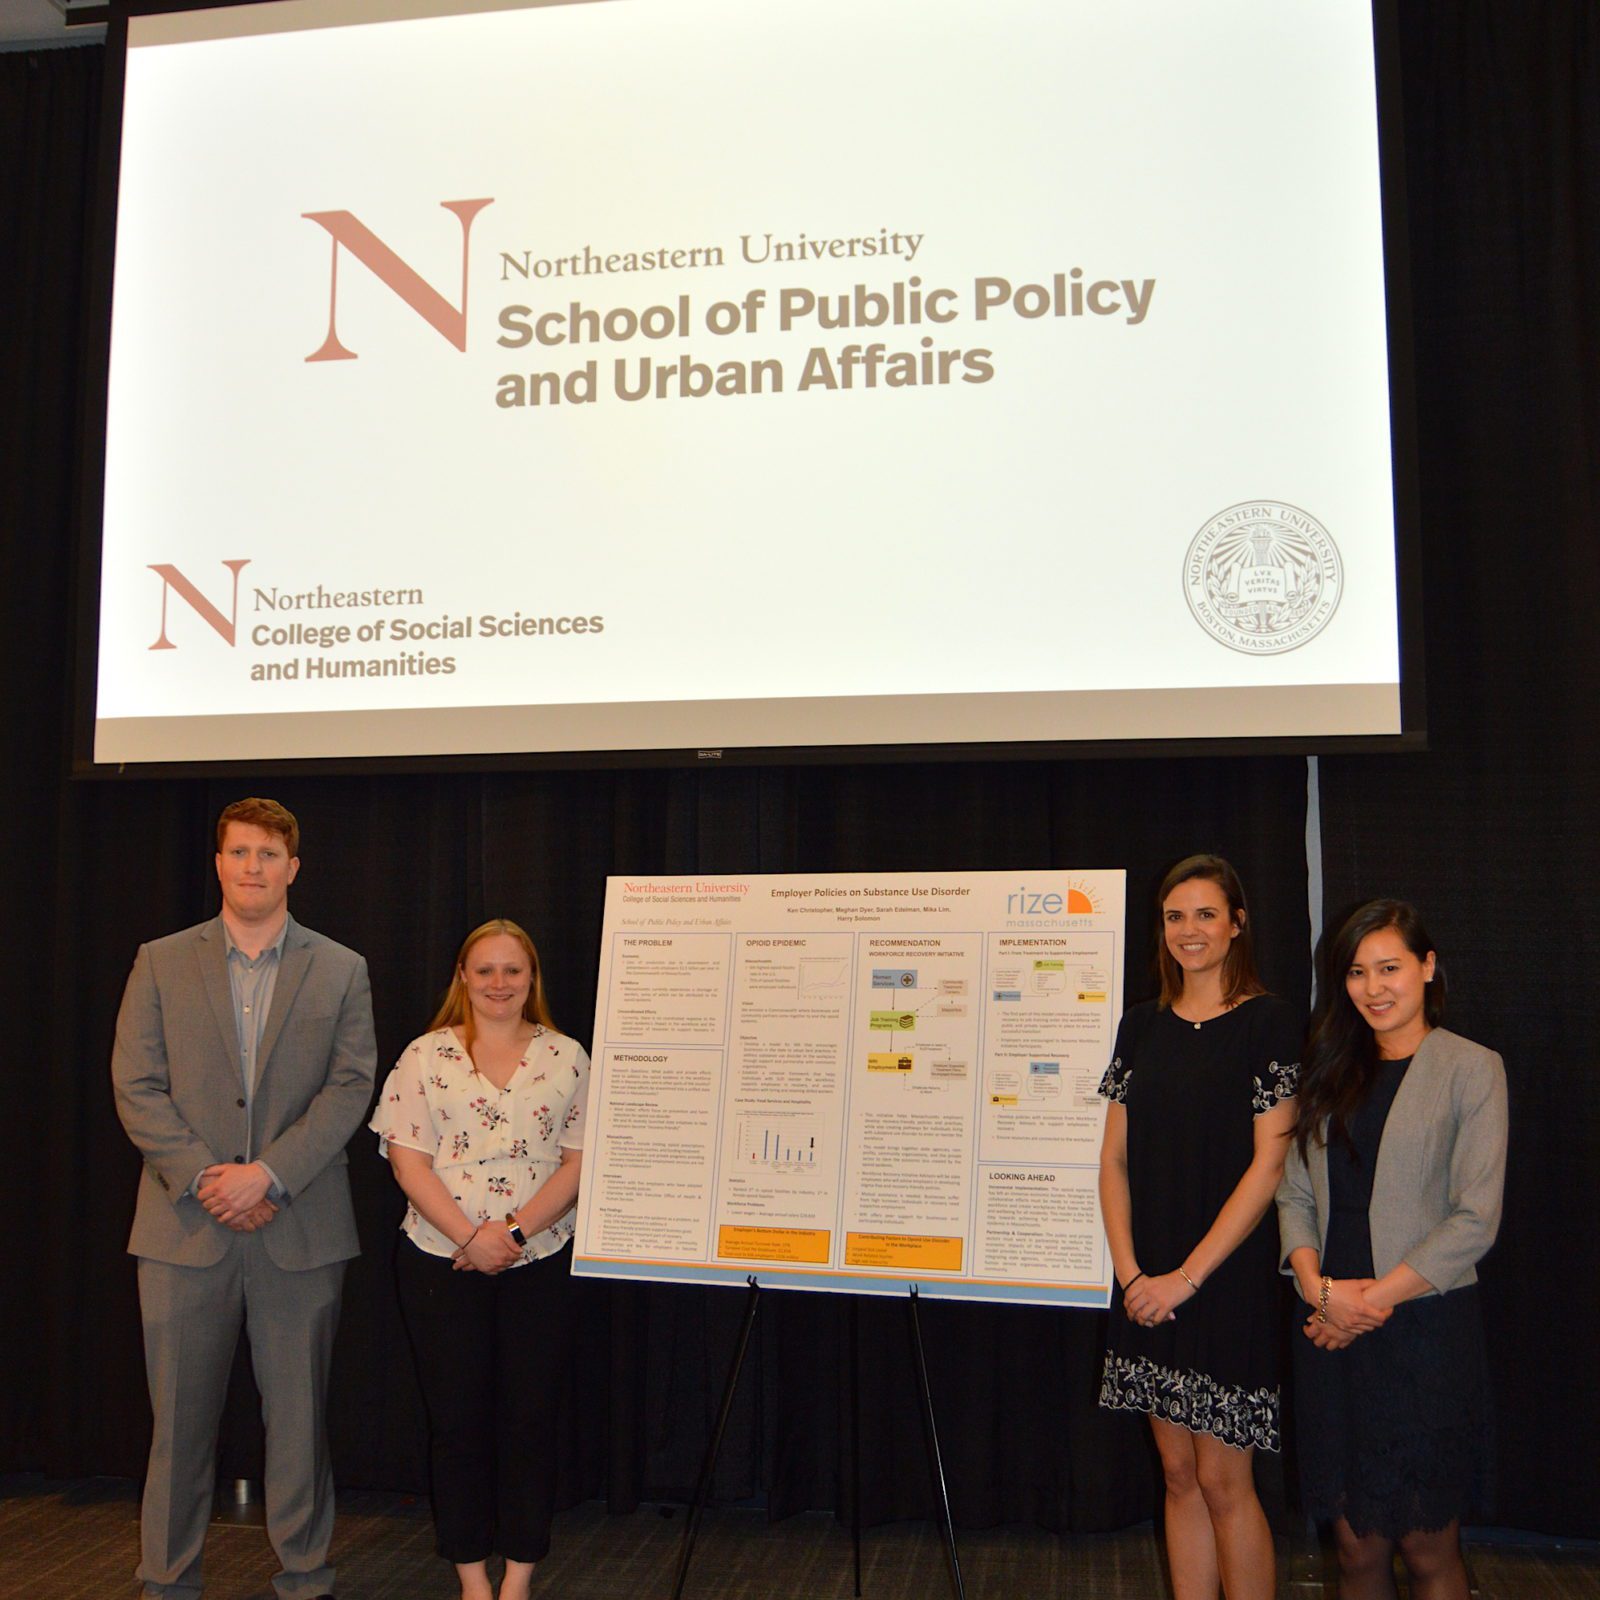 phd public policy curriculum